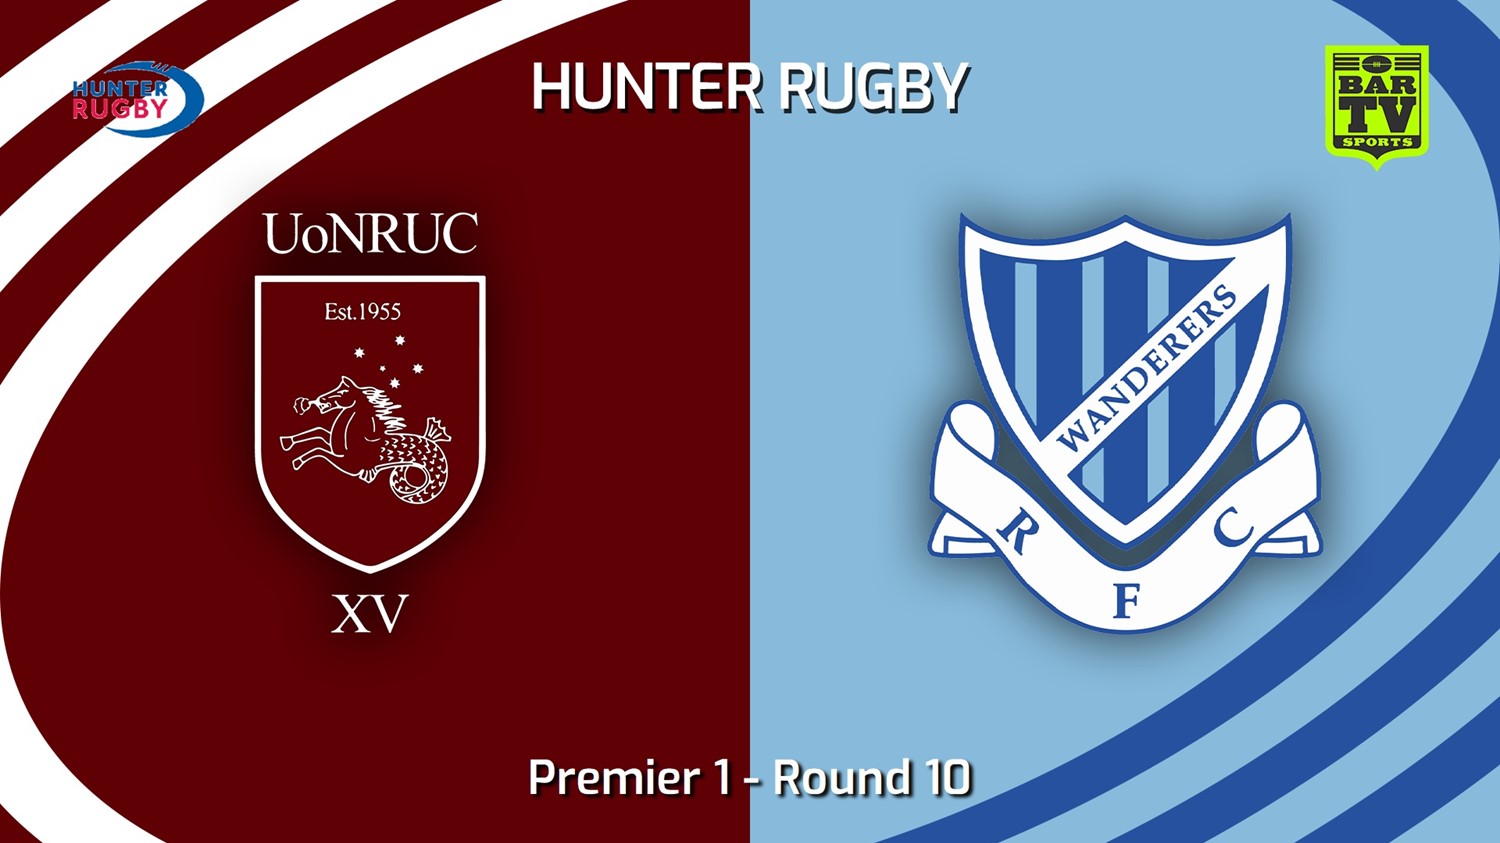 230624-Hunter Rugby Round 10 - Premier 1 - University Of Newcastle v Wanderers Minigame Slate Image